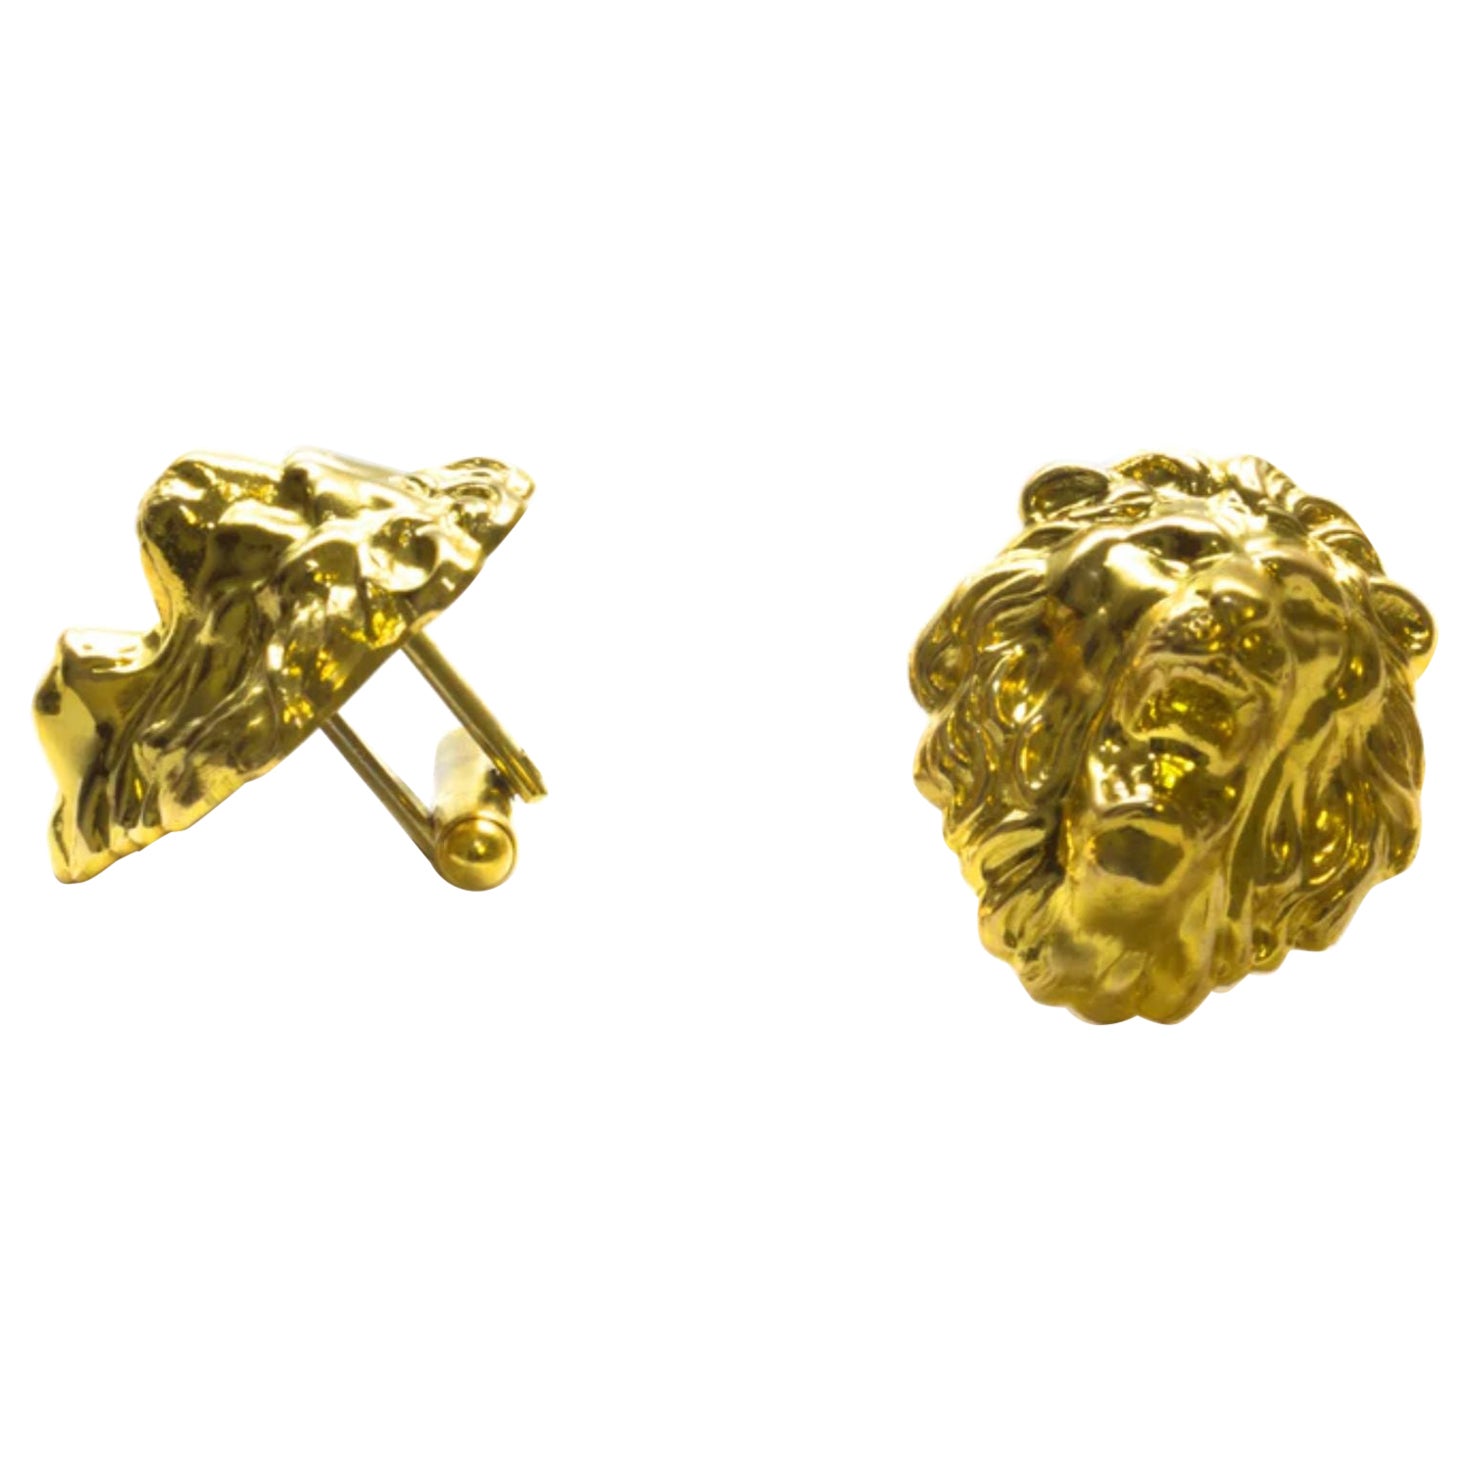 24K Gold Lion King Cufflinks Plated on Brass